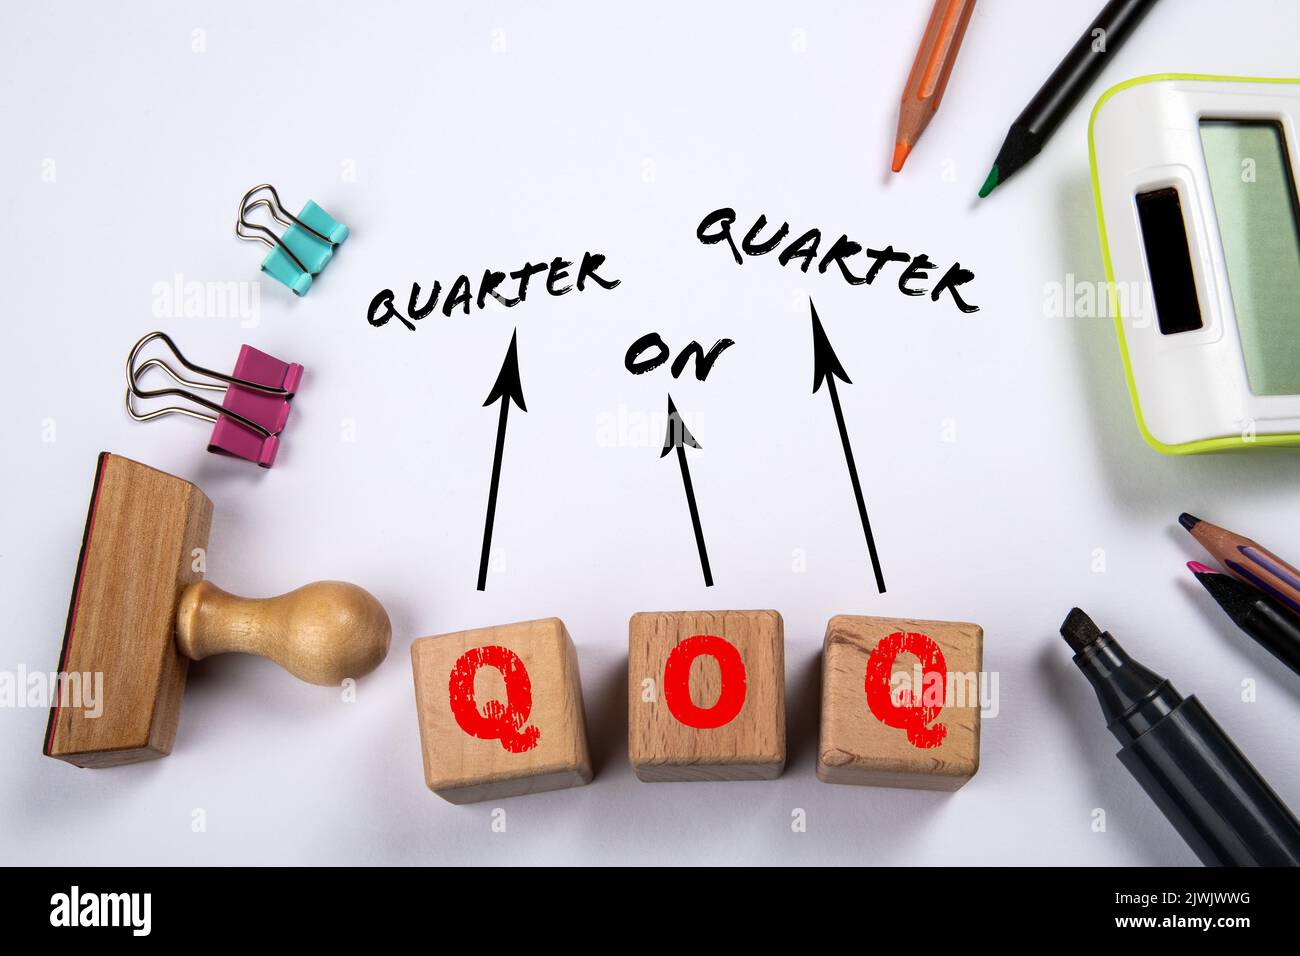 QOQ - Quarter On Quarter. White office desk. Stock Photo